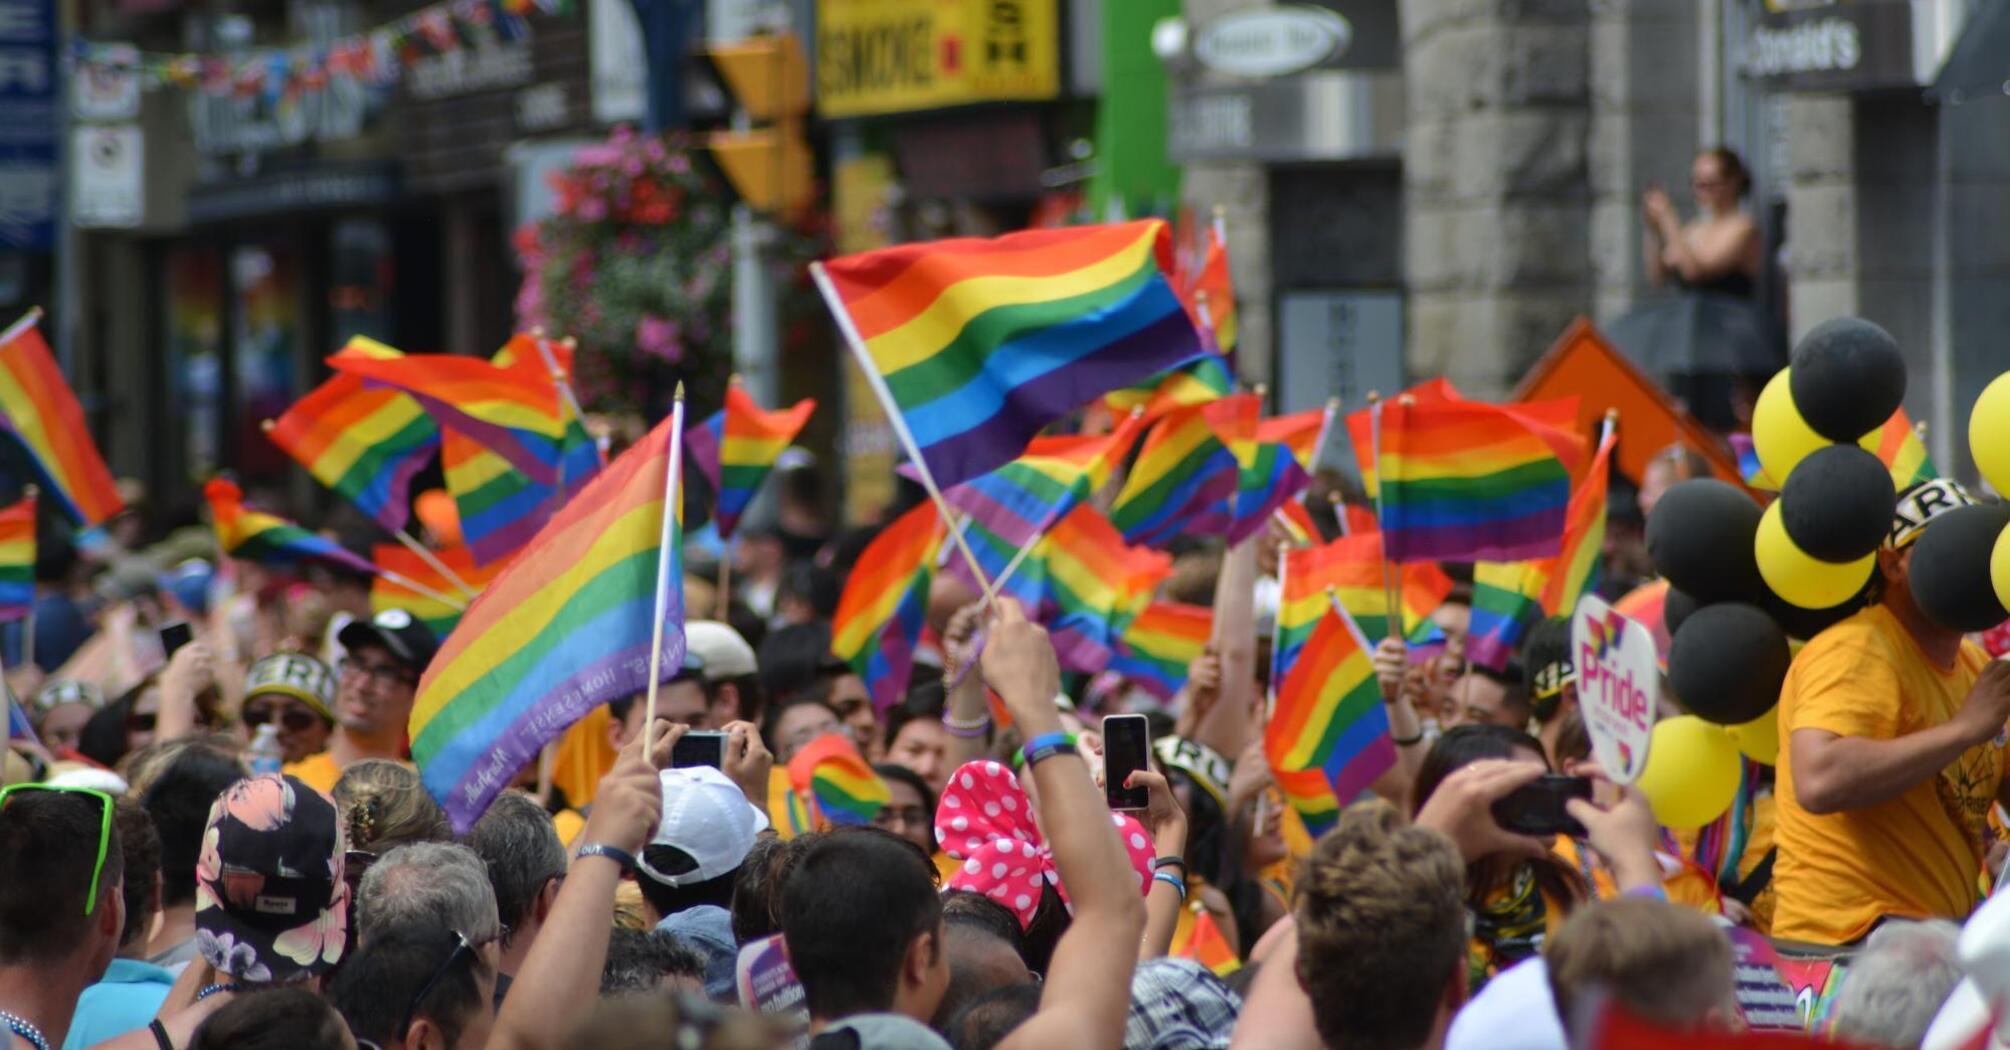 Pride festival participants joyfully wave rainbow flags on a bustling city street